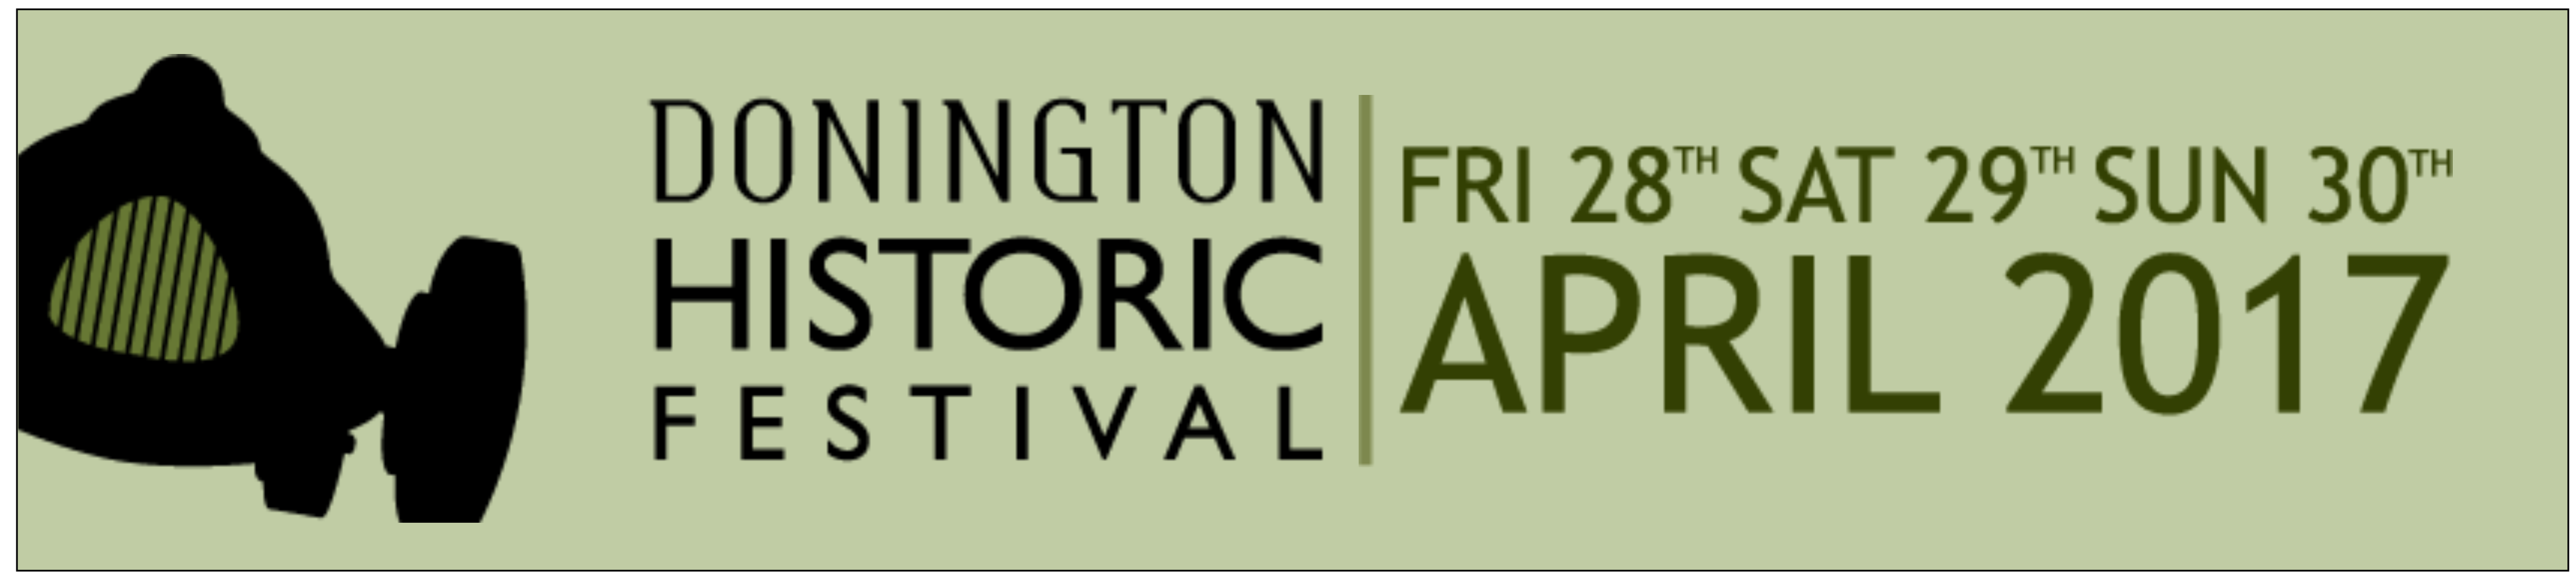 Donington Historic Festival - Fri 28th to Sun 30th